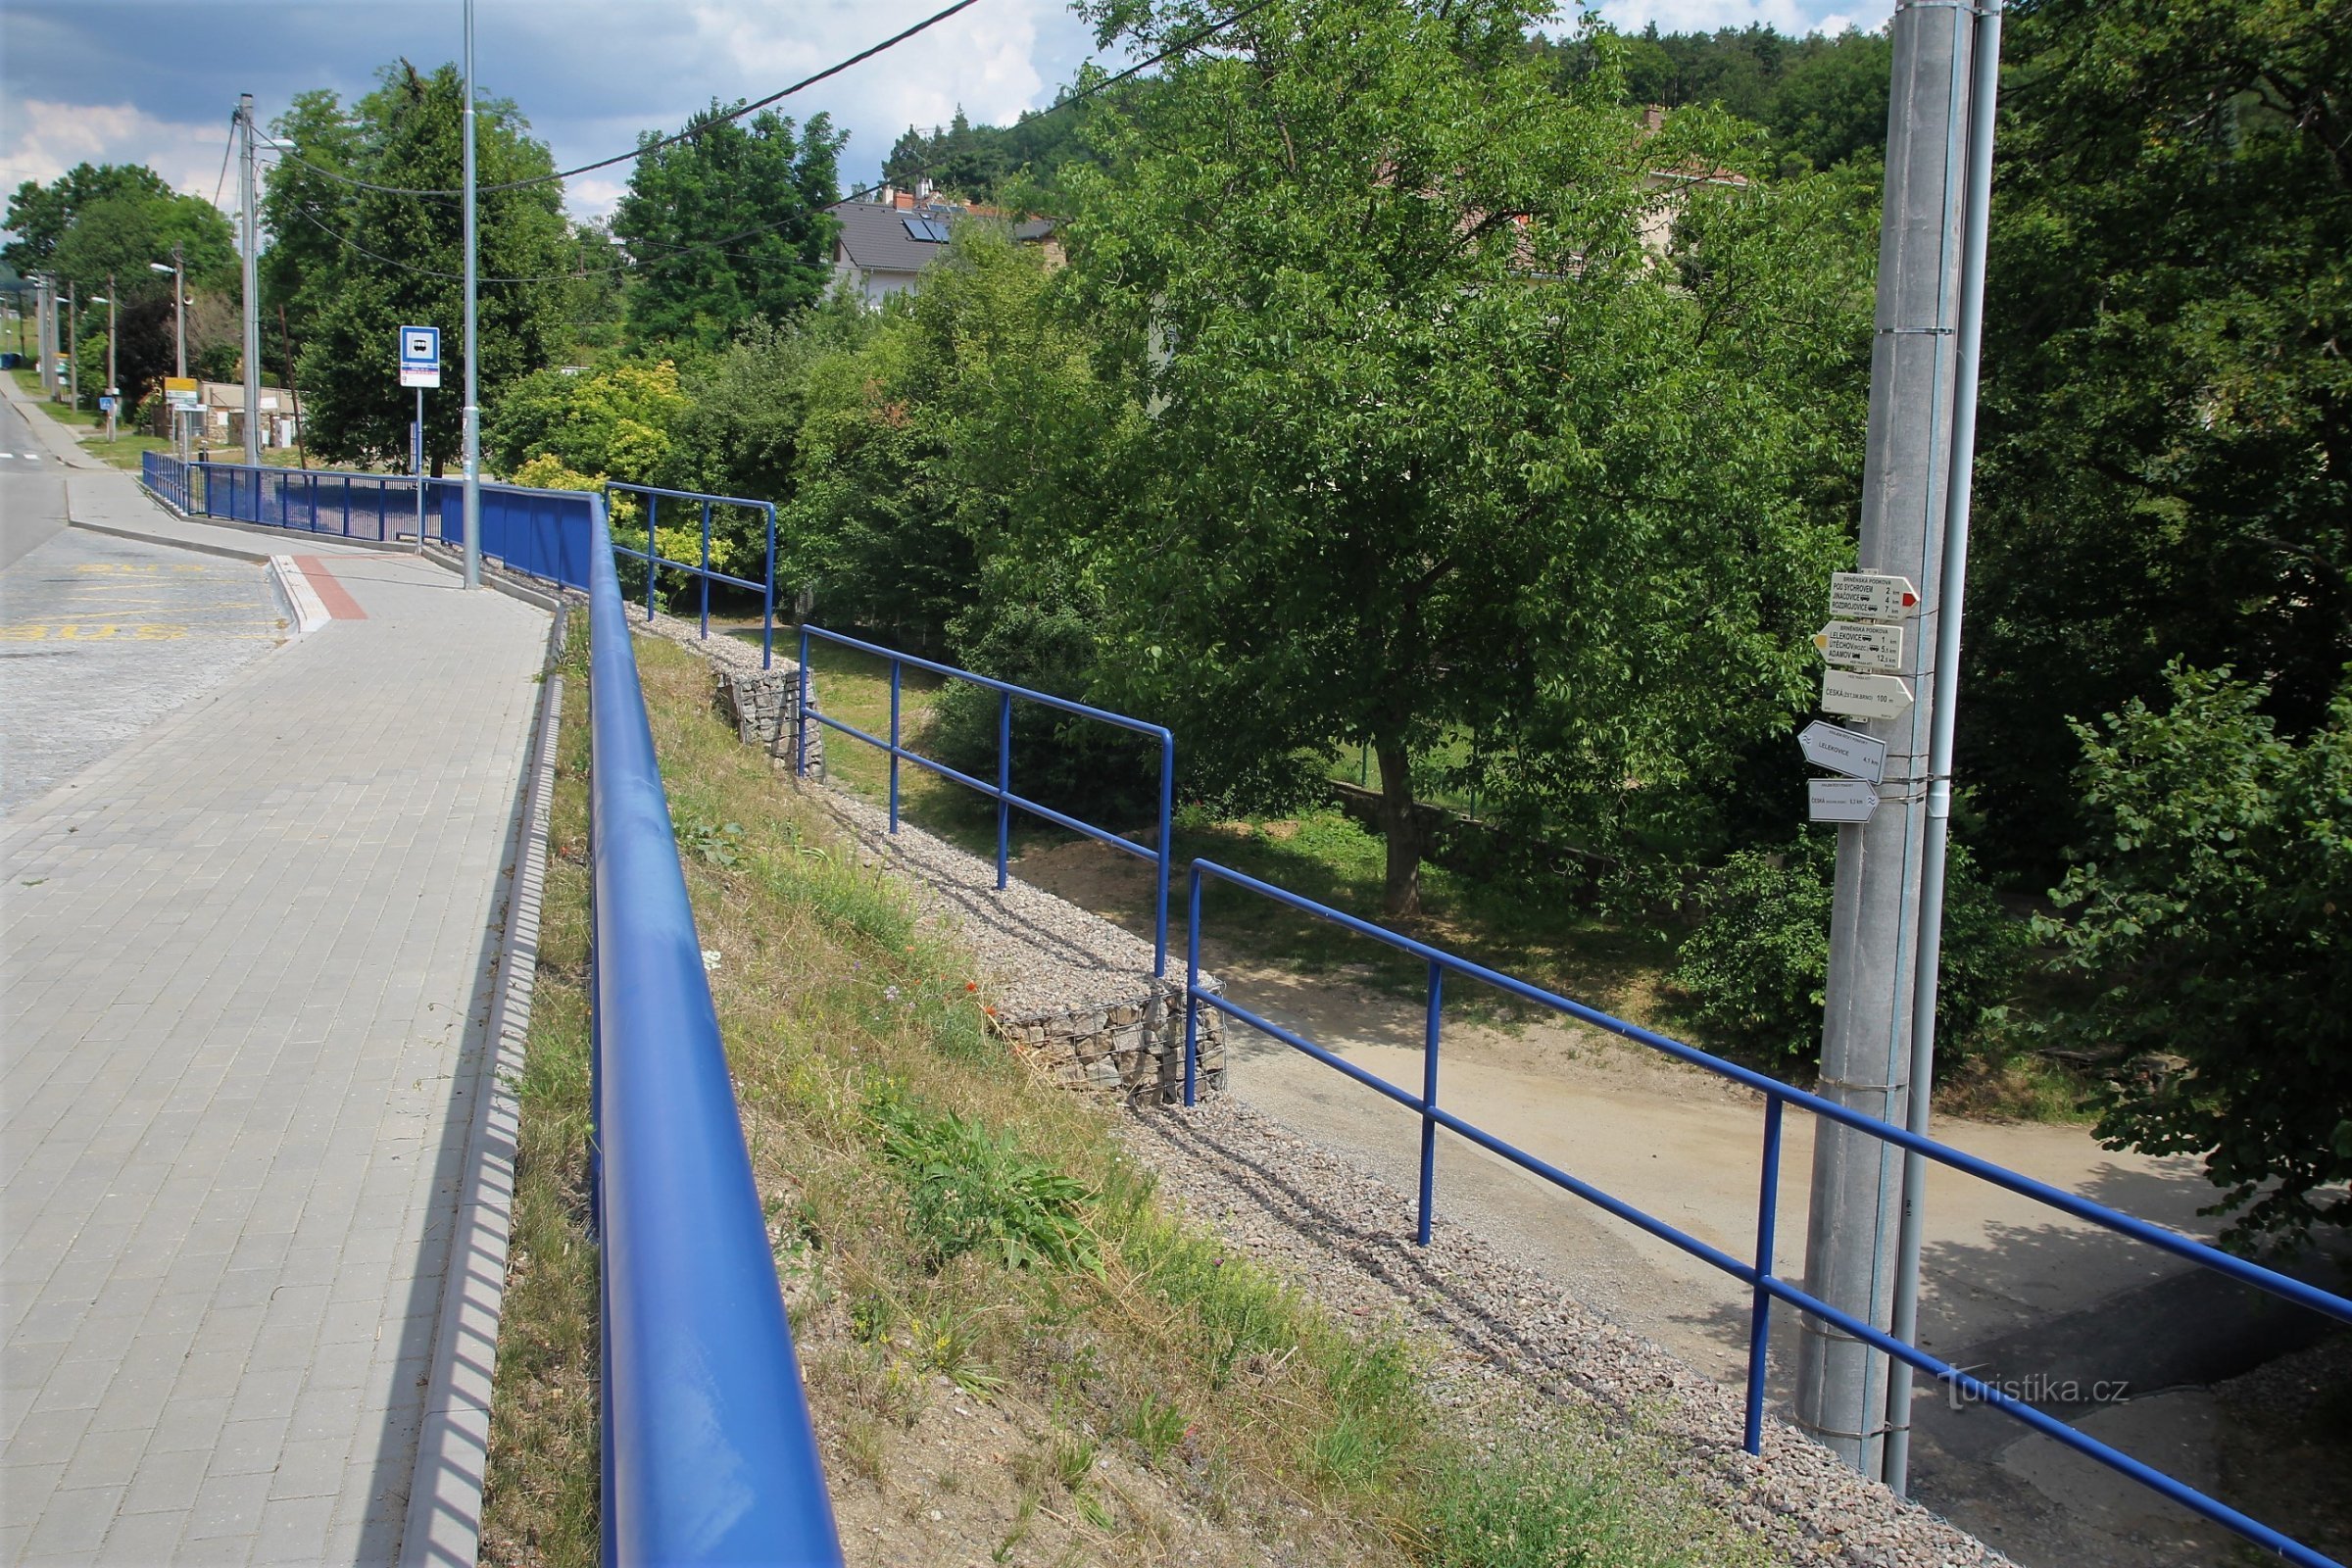 Ngã ba du lịch Česká, ga đường sắt